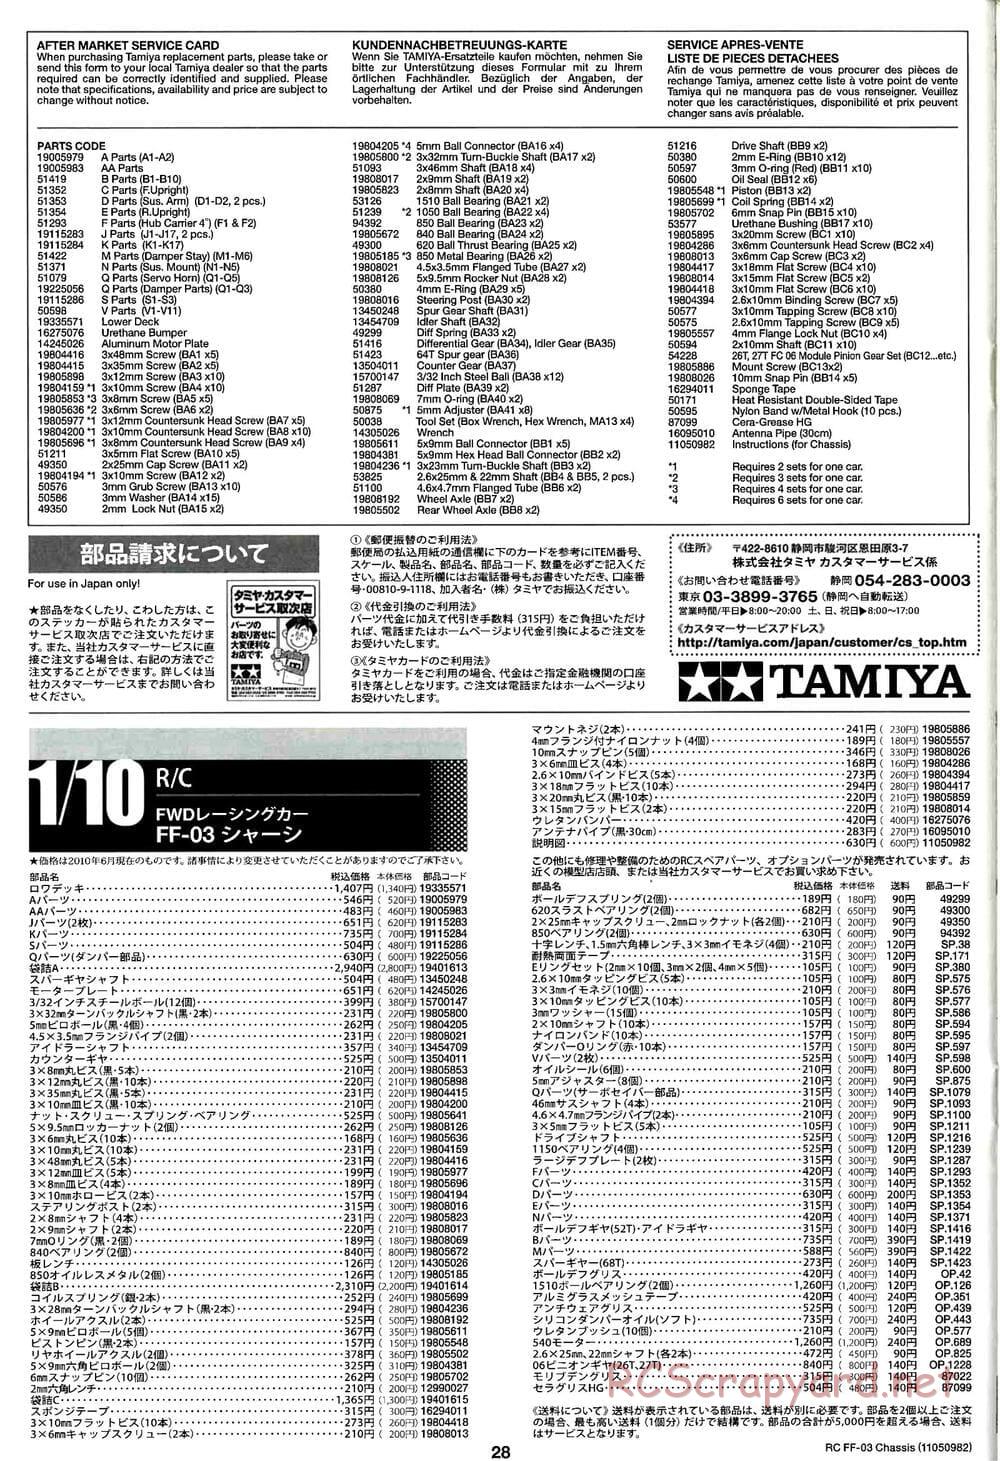 Tamiya - FF-03 Chassis - Manual - Page 28